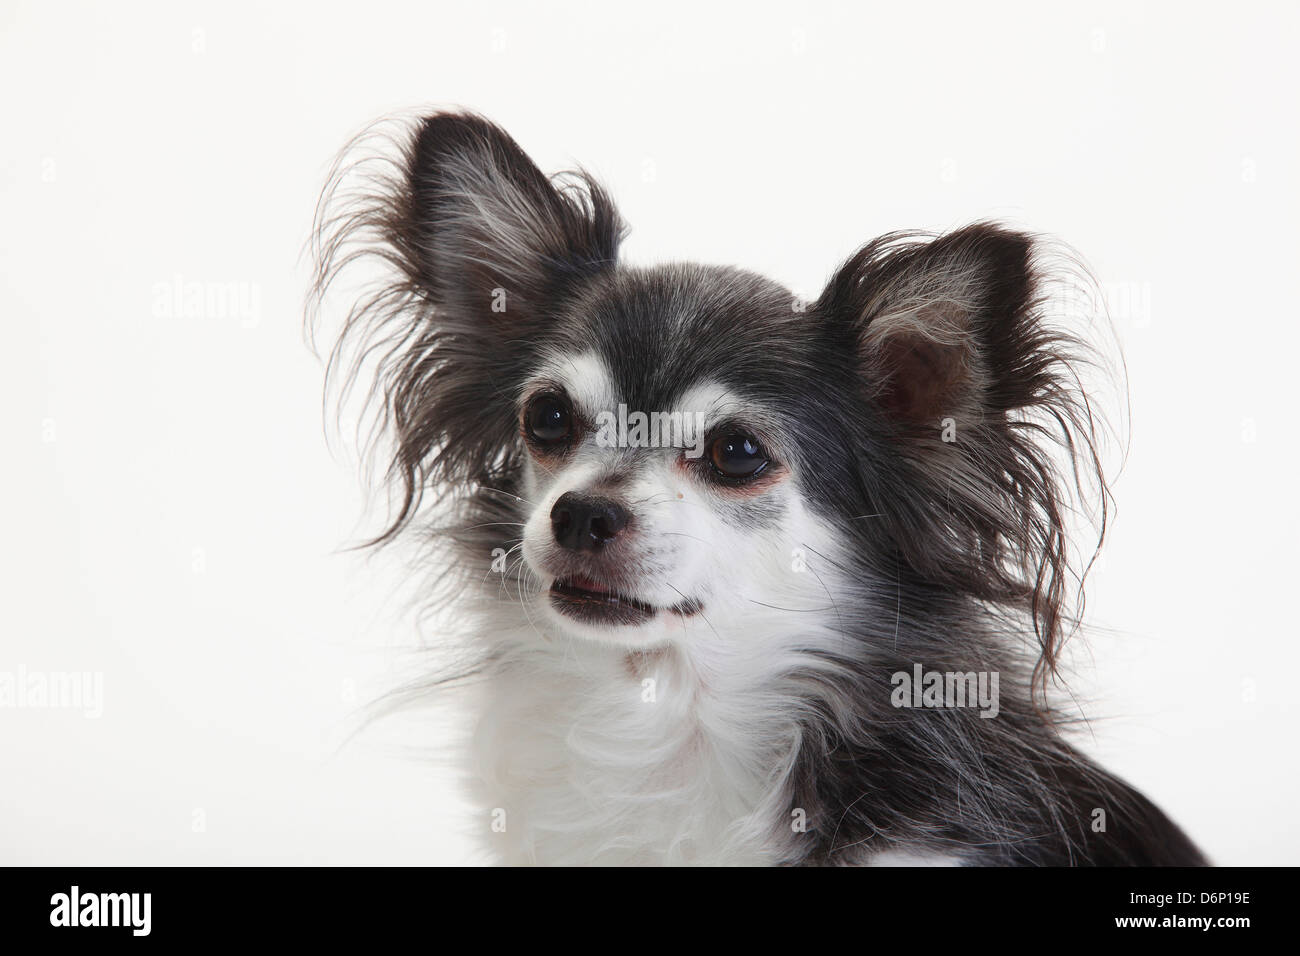 Chihuahua, longhaired, nero con bianco, 10 anni |Chihuahua, langhaarig, schwarz mit weiss, 10 Jahre alt / alter Hund Foto Stock